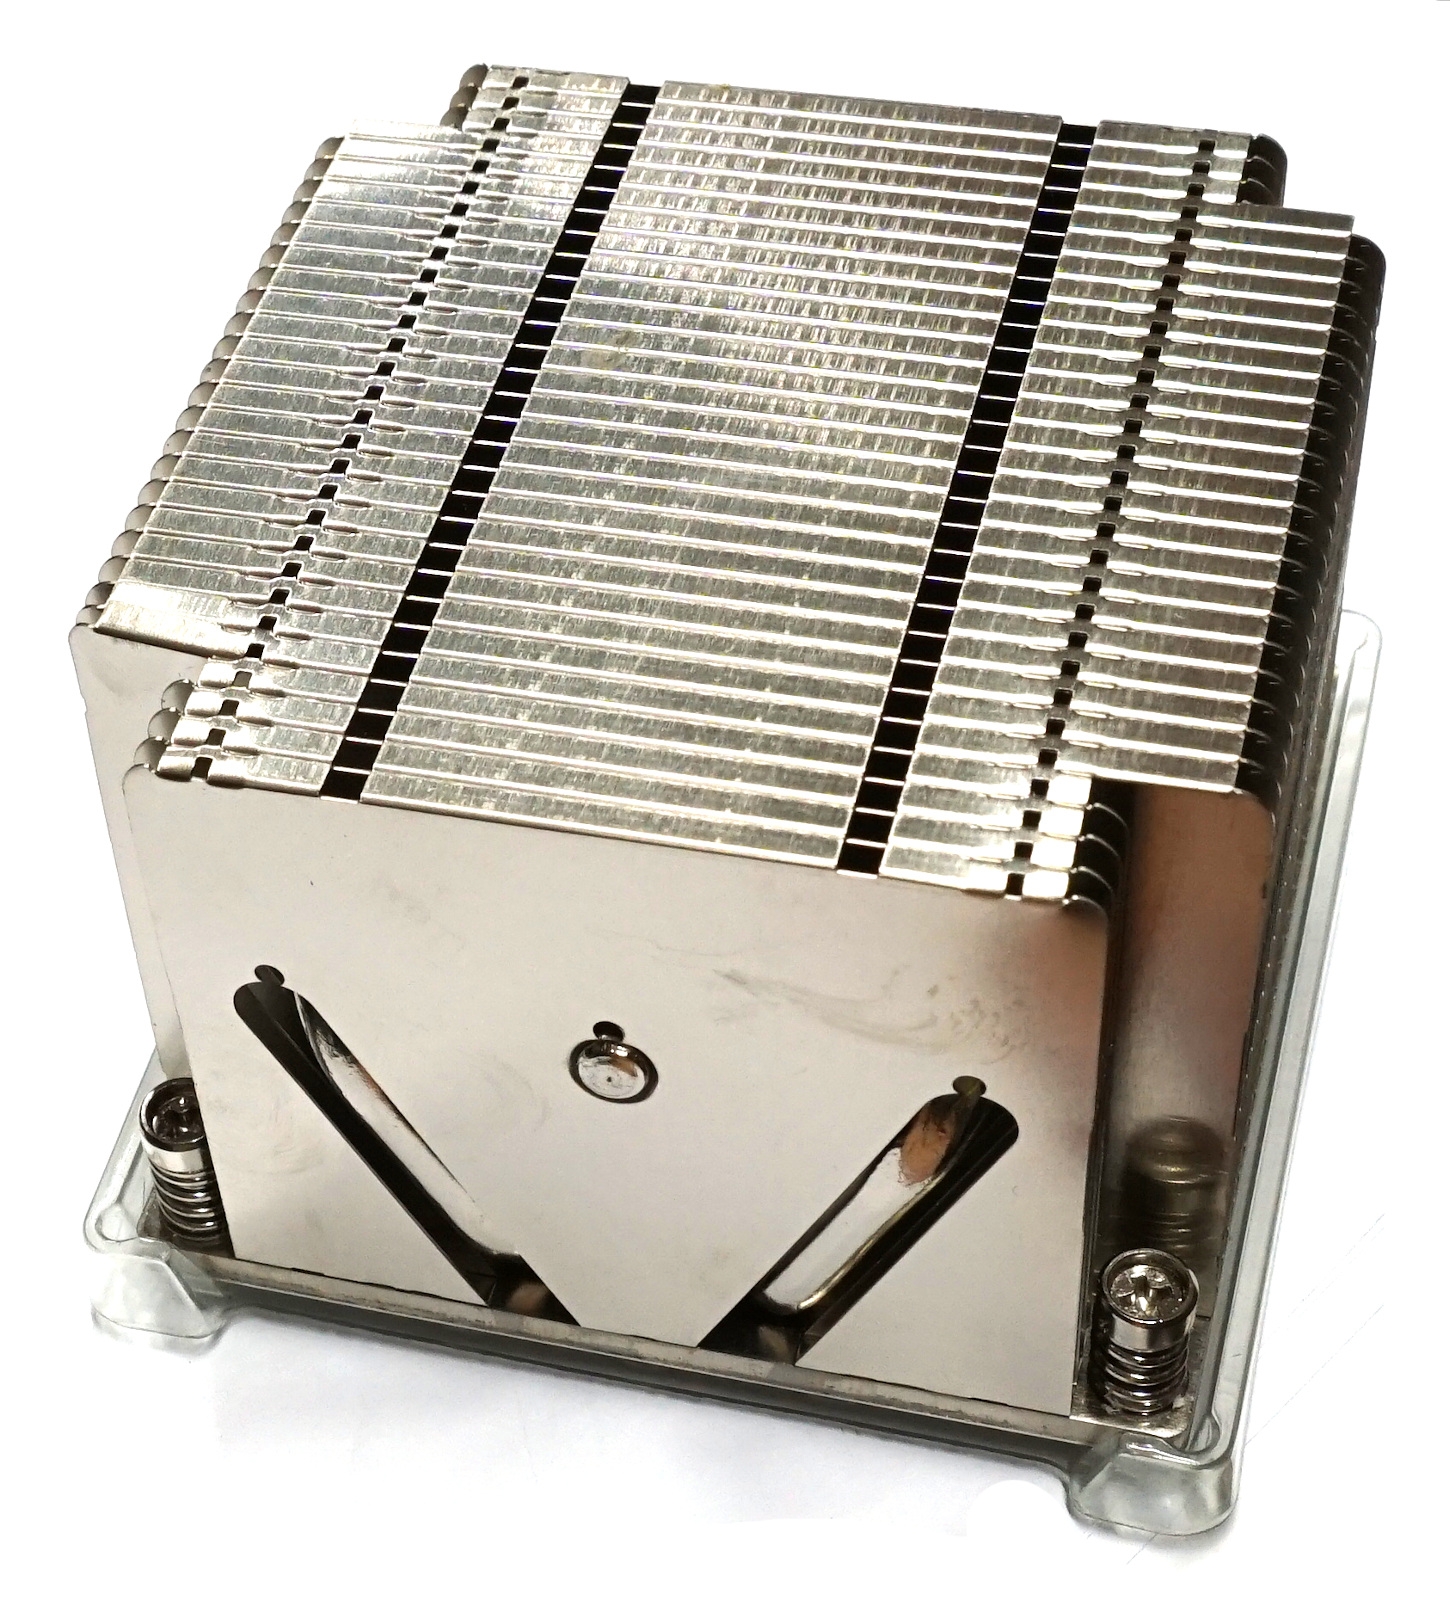 SuperMicro (SNK-P0048P) X9DRi-LN4F+ 2U LGA2011 Heatsink for CSE-826, CSE-835